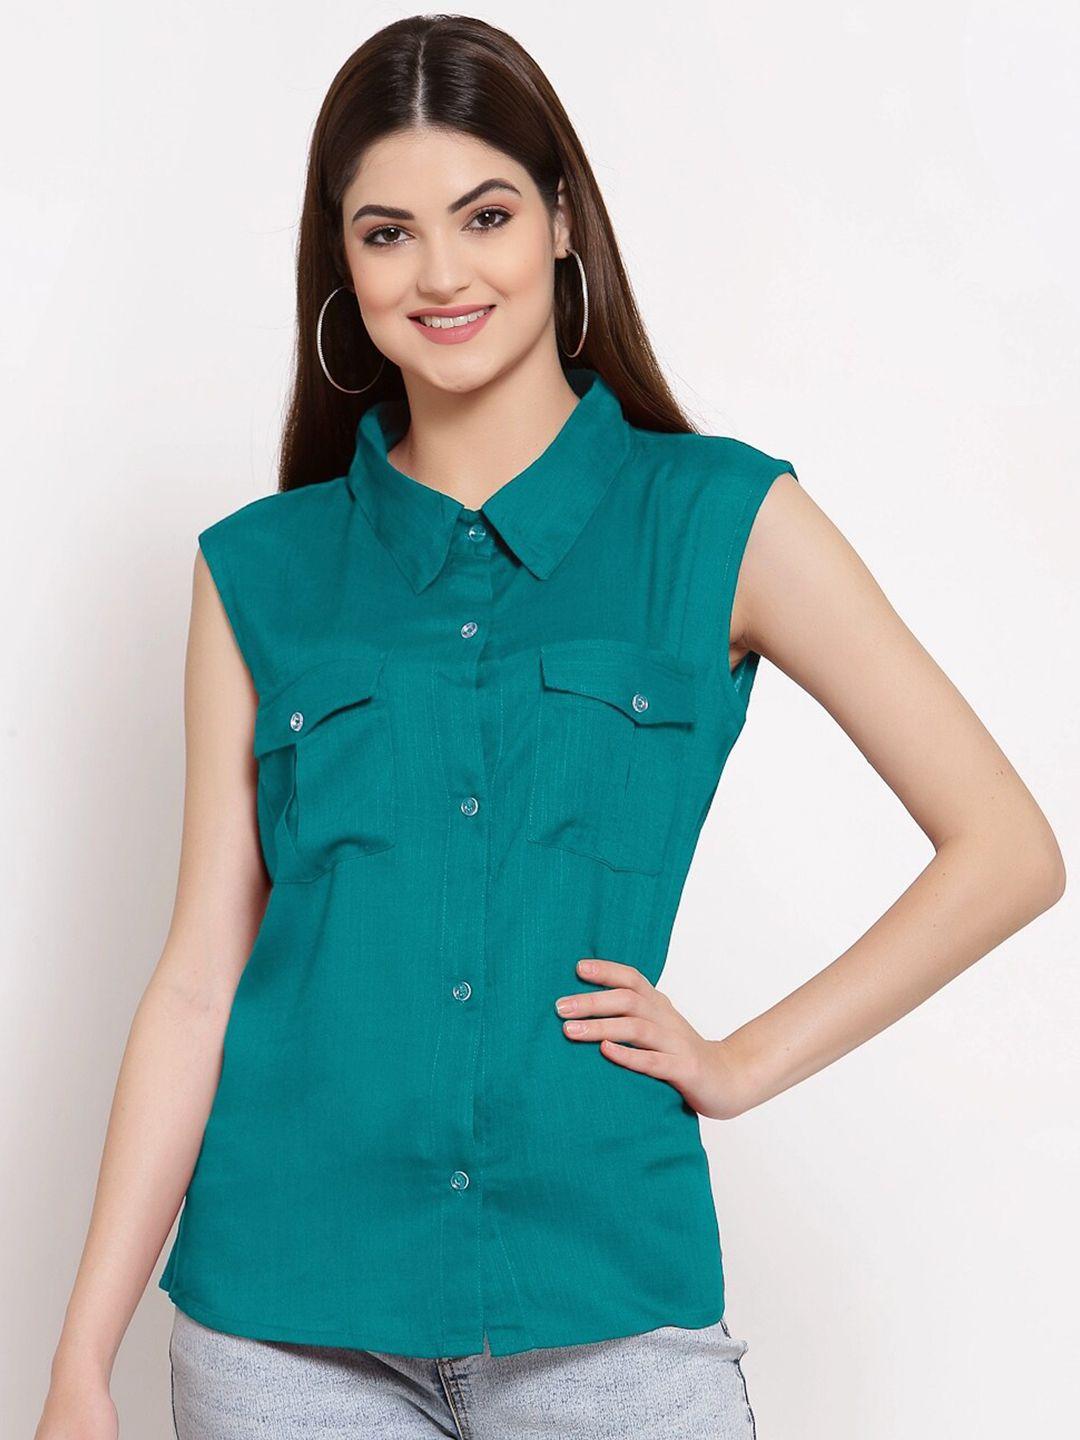 patrorna women green comfort casual shirt